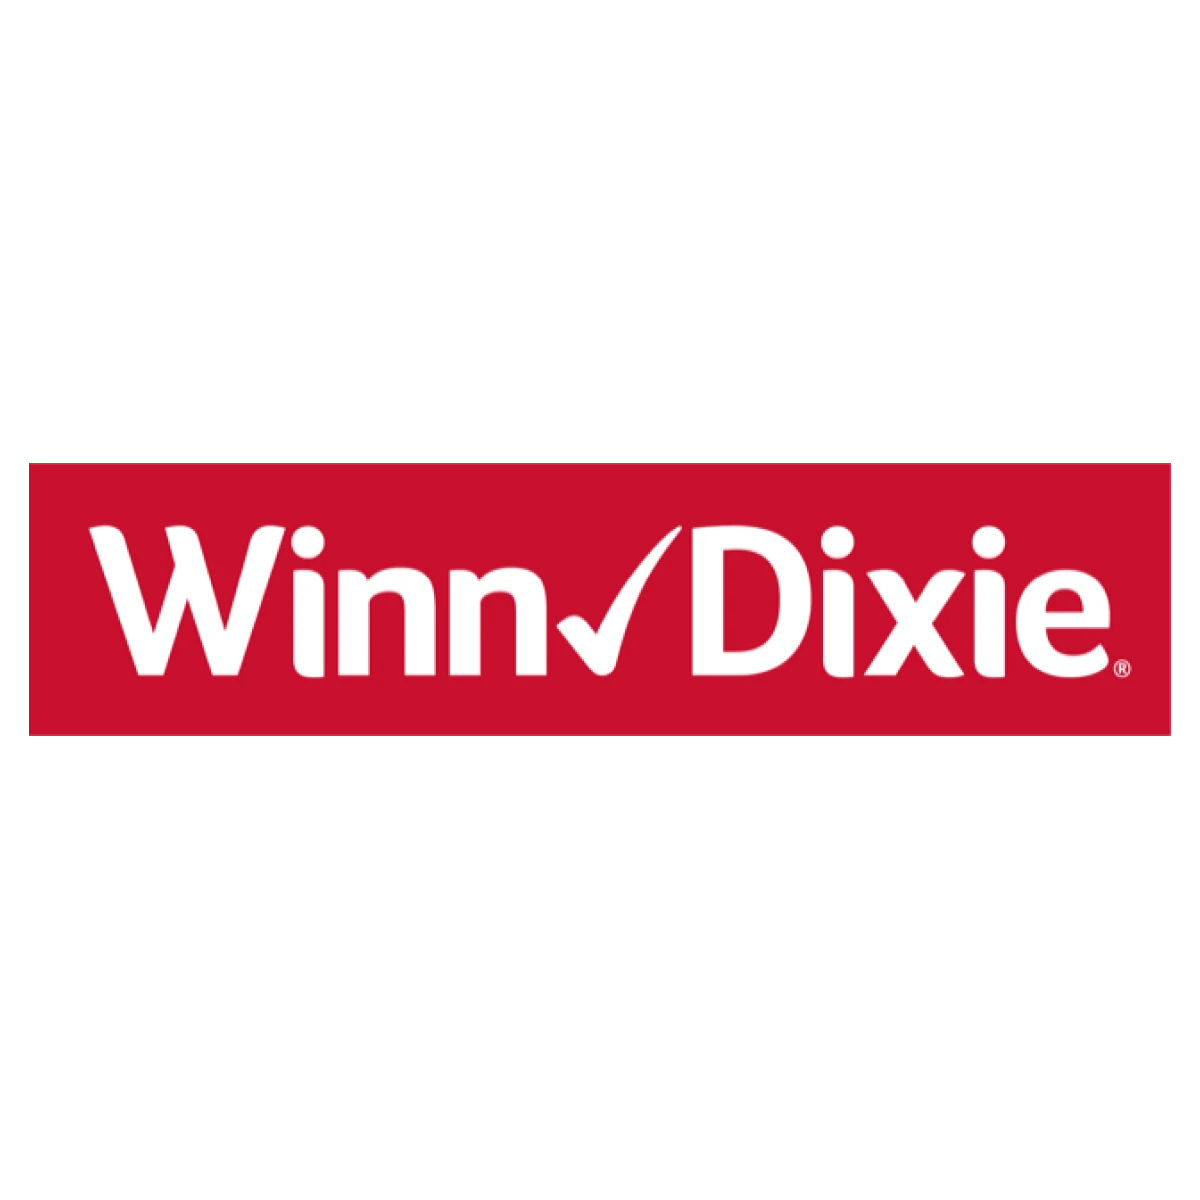 WinnDixie grocery store horizontal logo